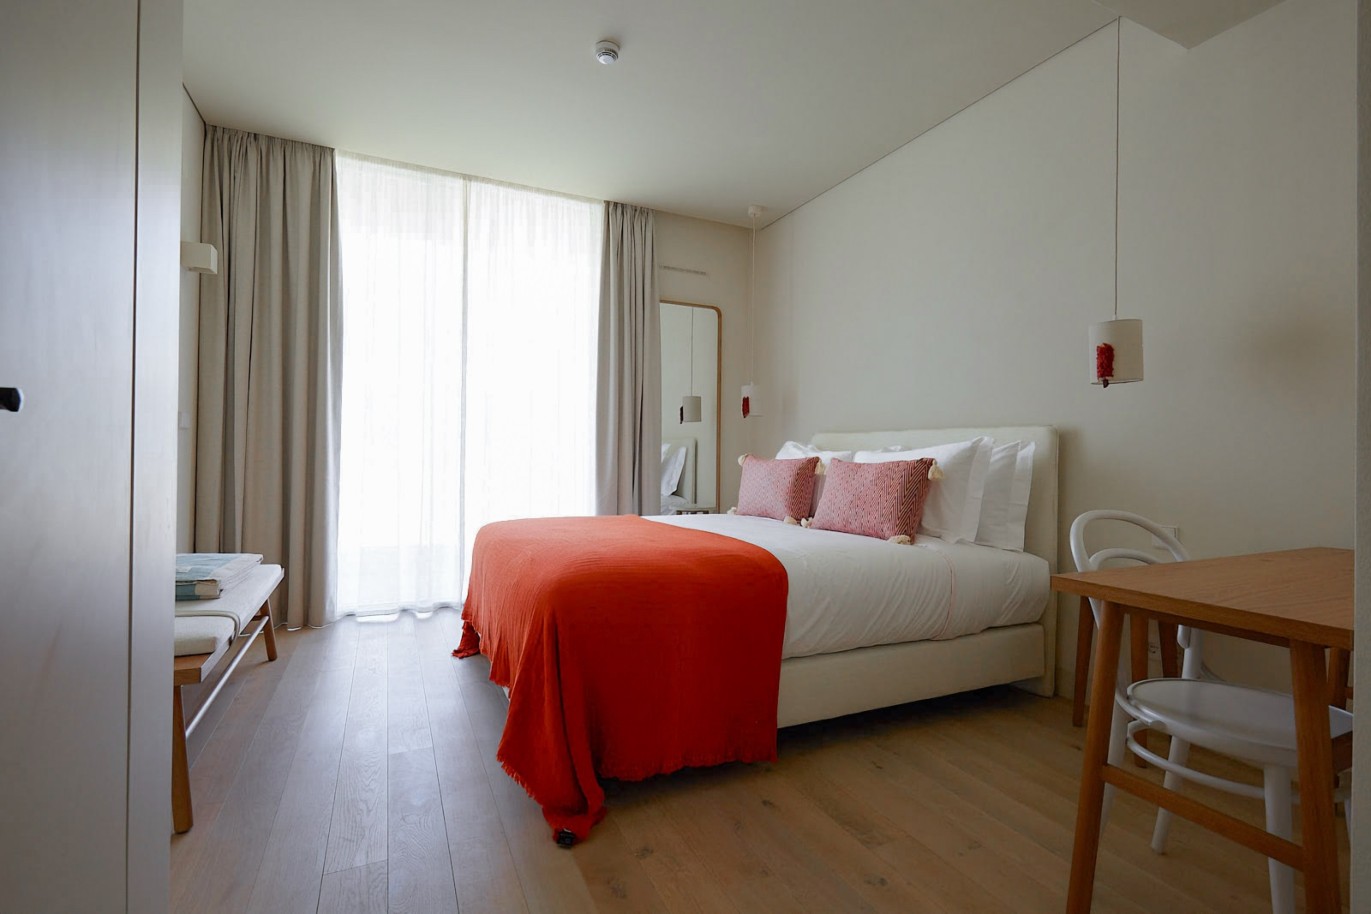 2 bedroom apartment in resort, for sale in Porches, Algarve_228884